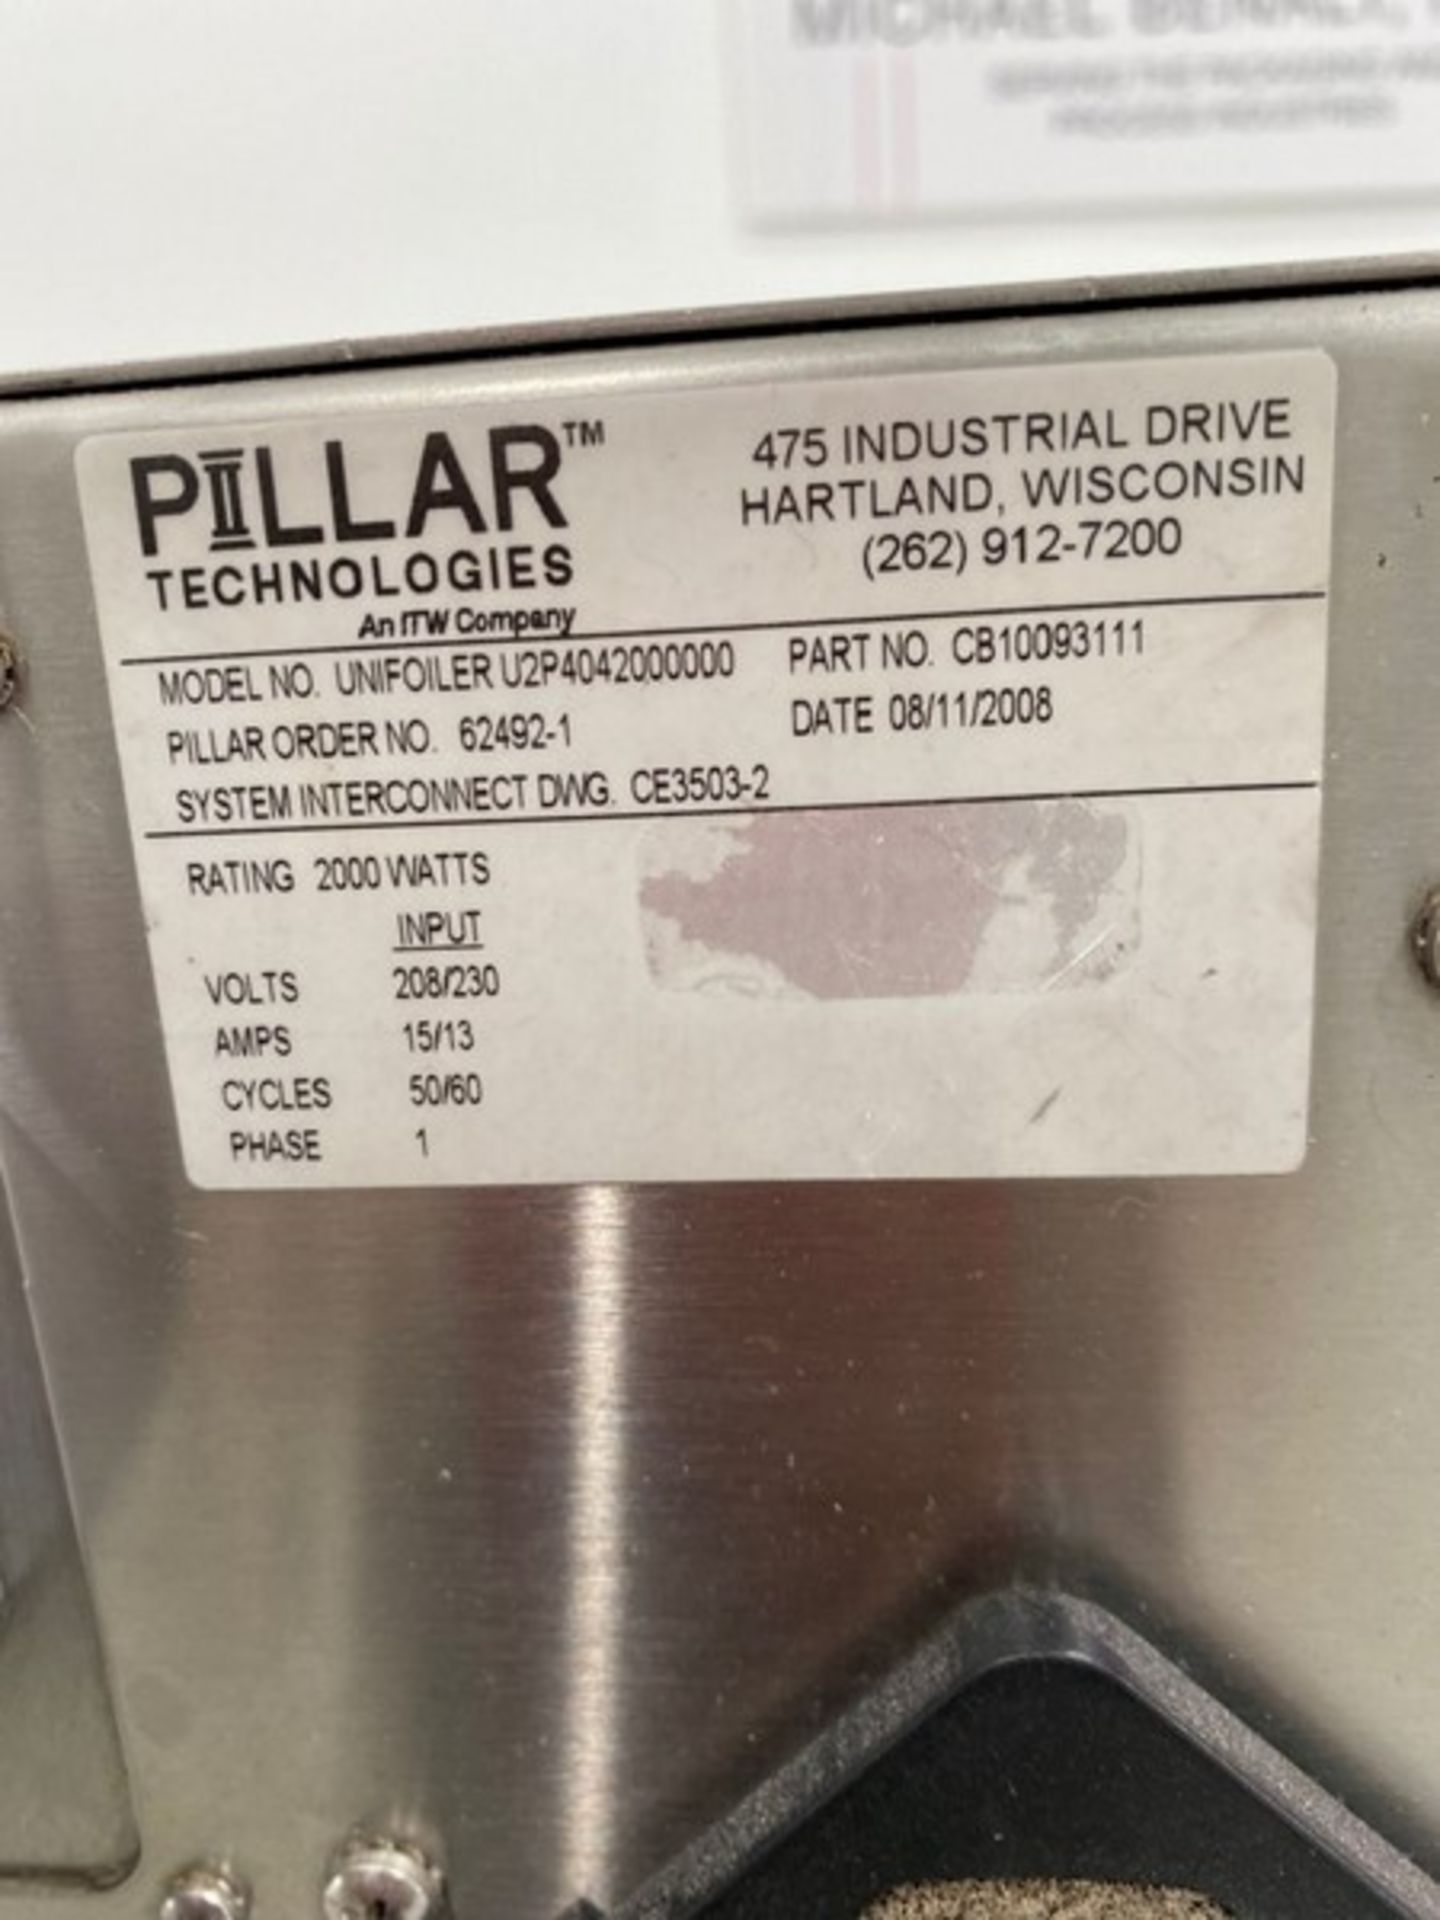 Pillar Unifoiler Induction Sealer. 2000 Watts, 208/230 Volt, 15/13 Amp, 50/60 Hz, Single Phase. Flat - Image 3 of 3